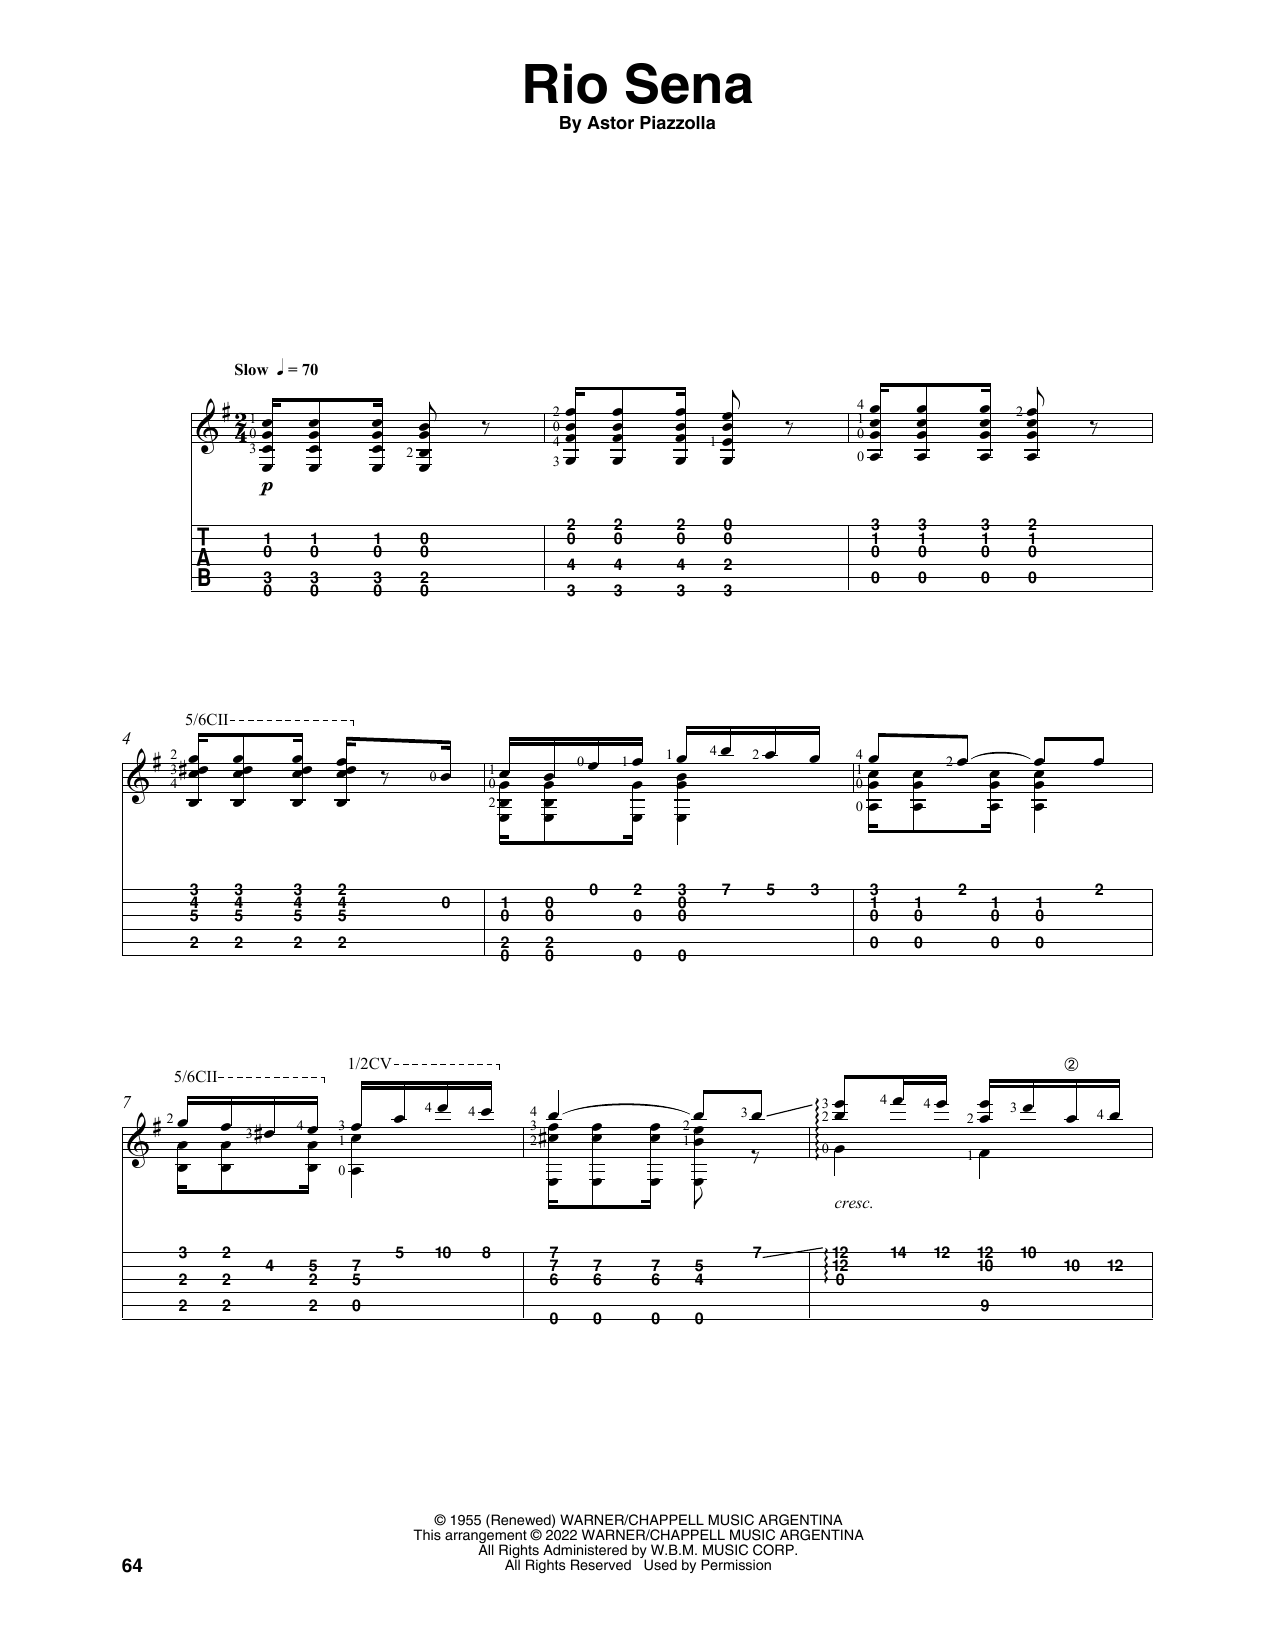 Astor Piazzolla Rio Sena (arr. Celil Refik Kaya) Sheet Music Notes & Chords for Solo Guitar - Download or Print PDF